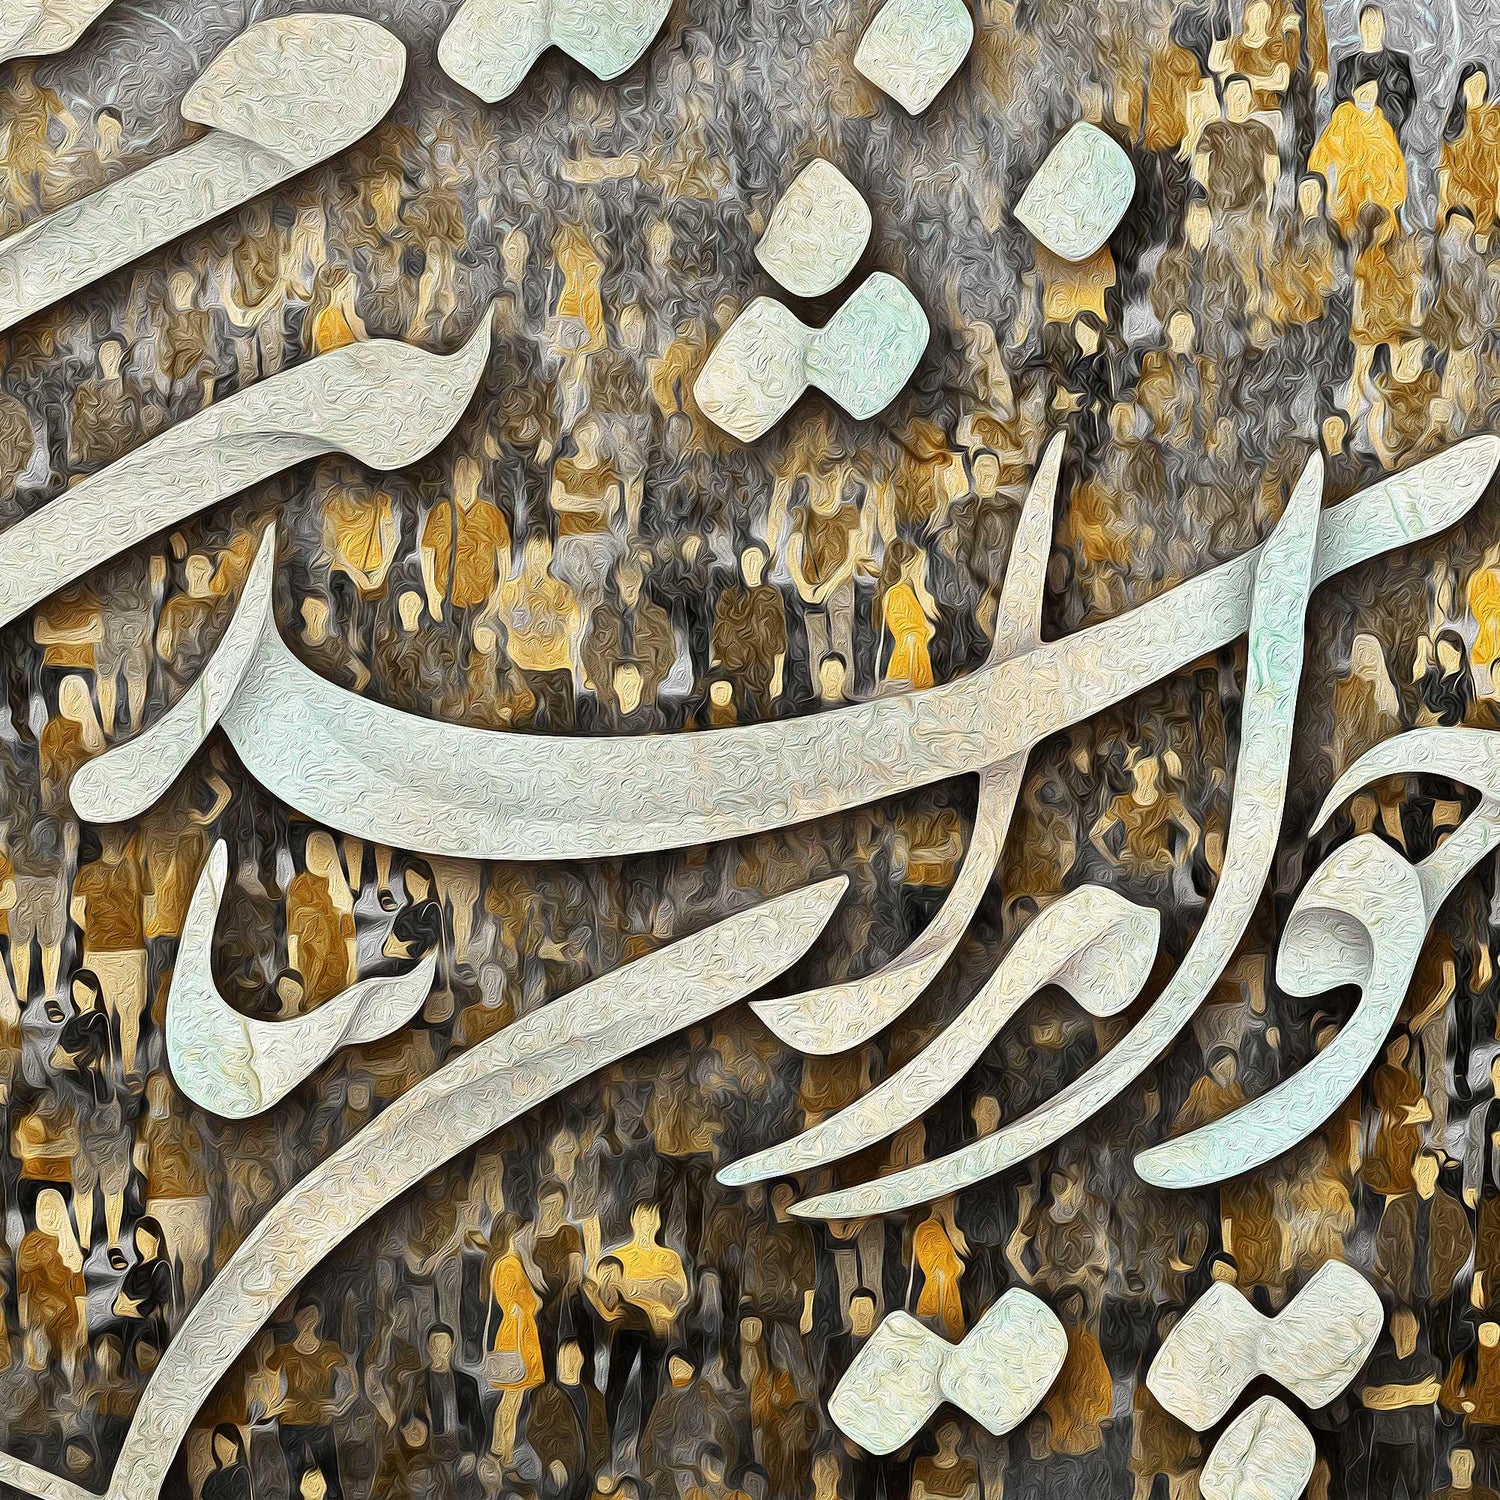 Cho IRAN Nabashad | Modern Persian Calligraphy Wall Art - ORIAVI Persian Art, persian artwork for sale, persian calligraphy, persian calligraphy wall art, persian mix media wall art, persian painting, persian wall art